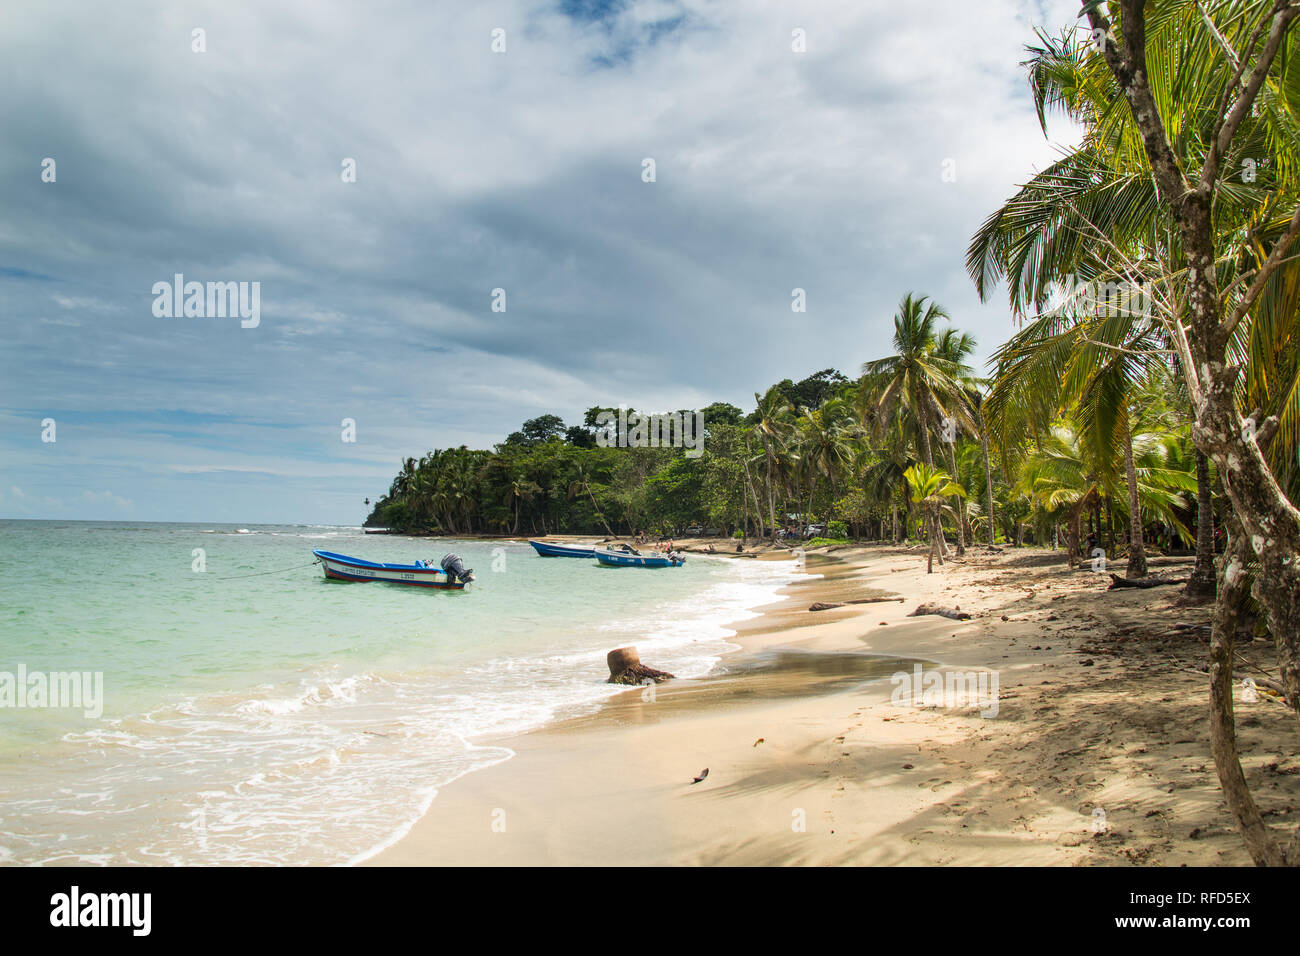 A scenic landscape photo of a wild and beautiful sandy beach at tropical Manzanillo - the romantic Caribbean side Costa Rica. Stock Photo